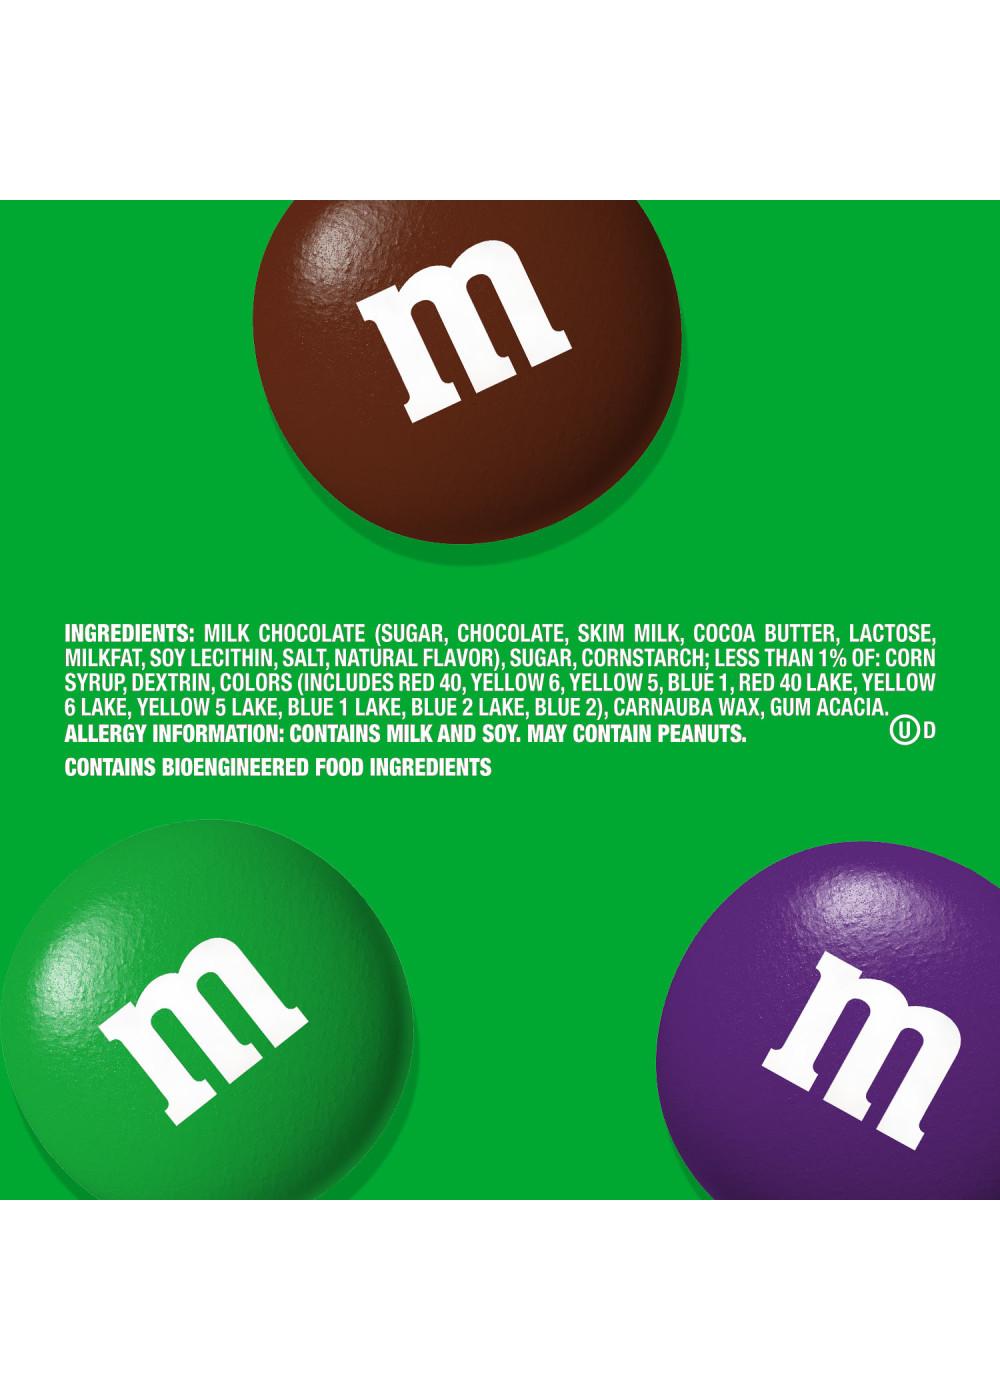 M&M's Milk Chocolate Share Size Purple Moment 3.14oz